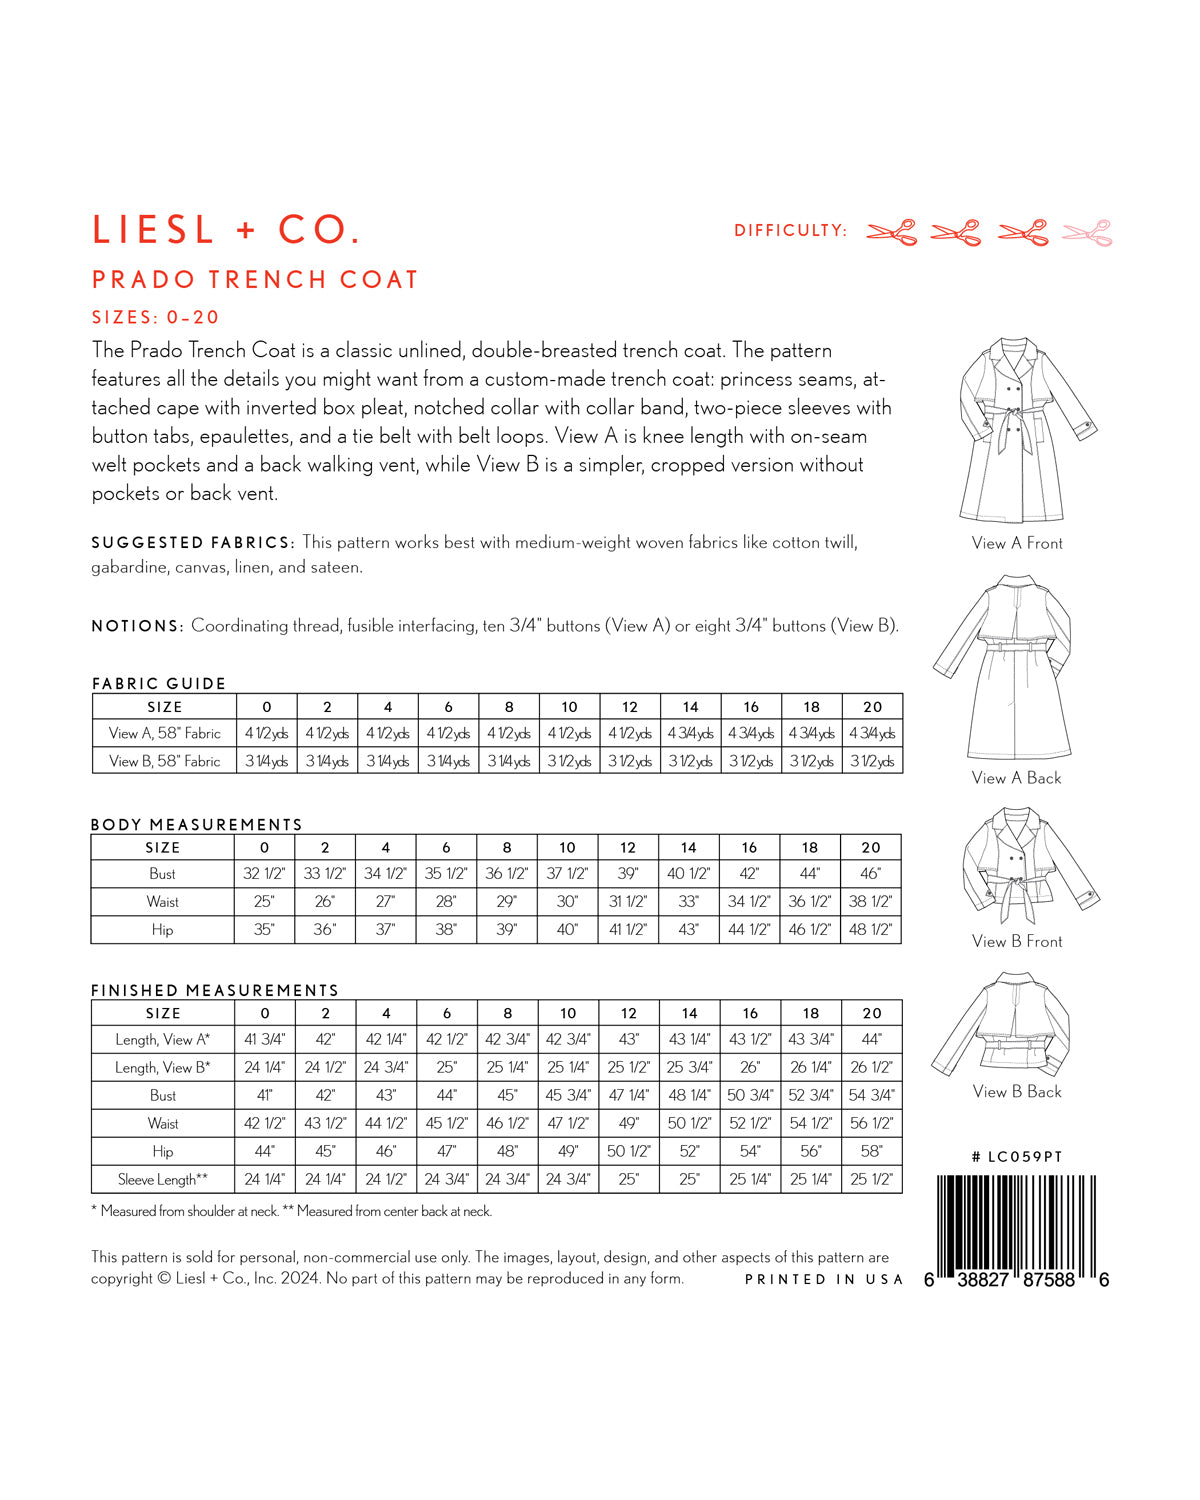 Liesl + Co Prado Trench Coat